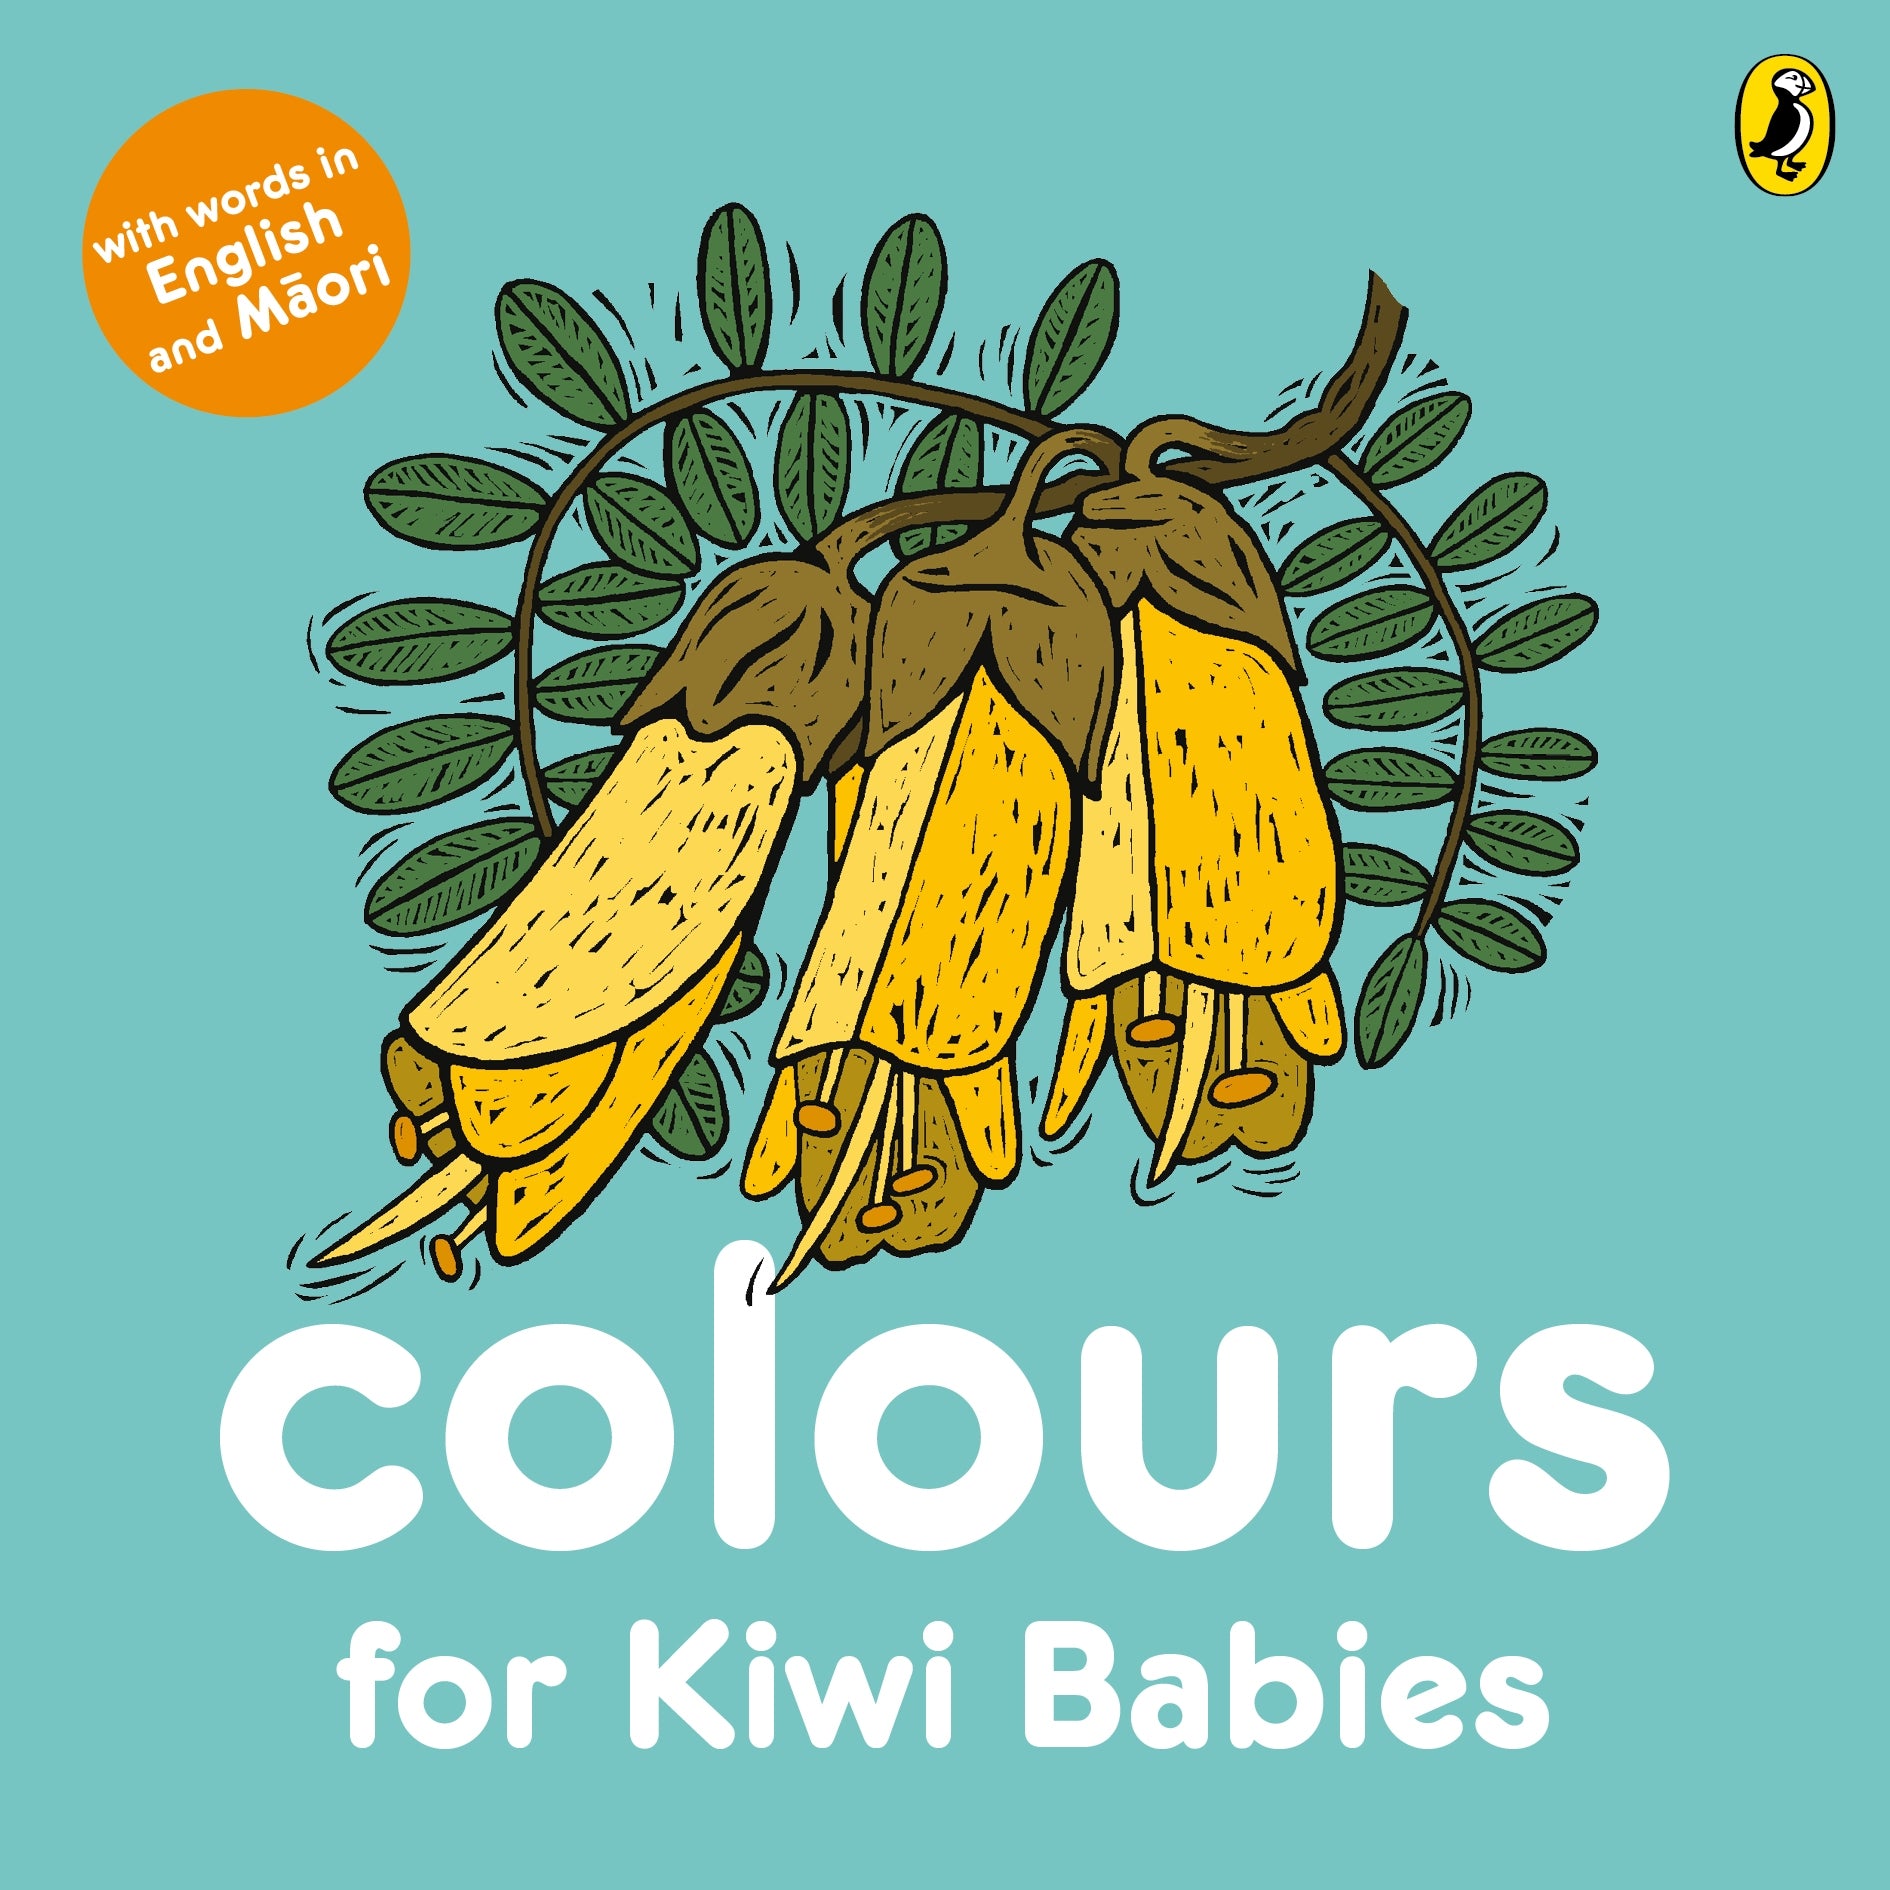 Colours for Kiwi Babies in Maori and English